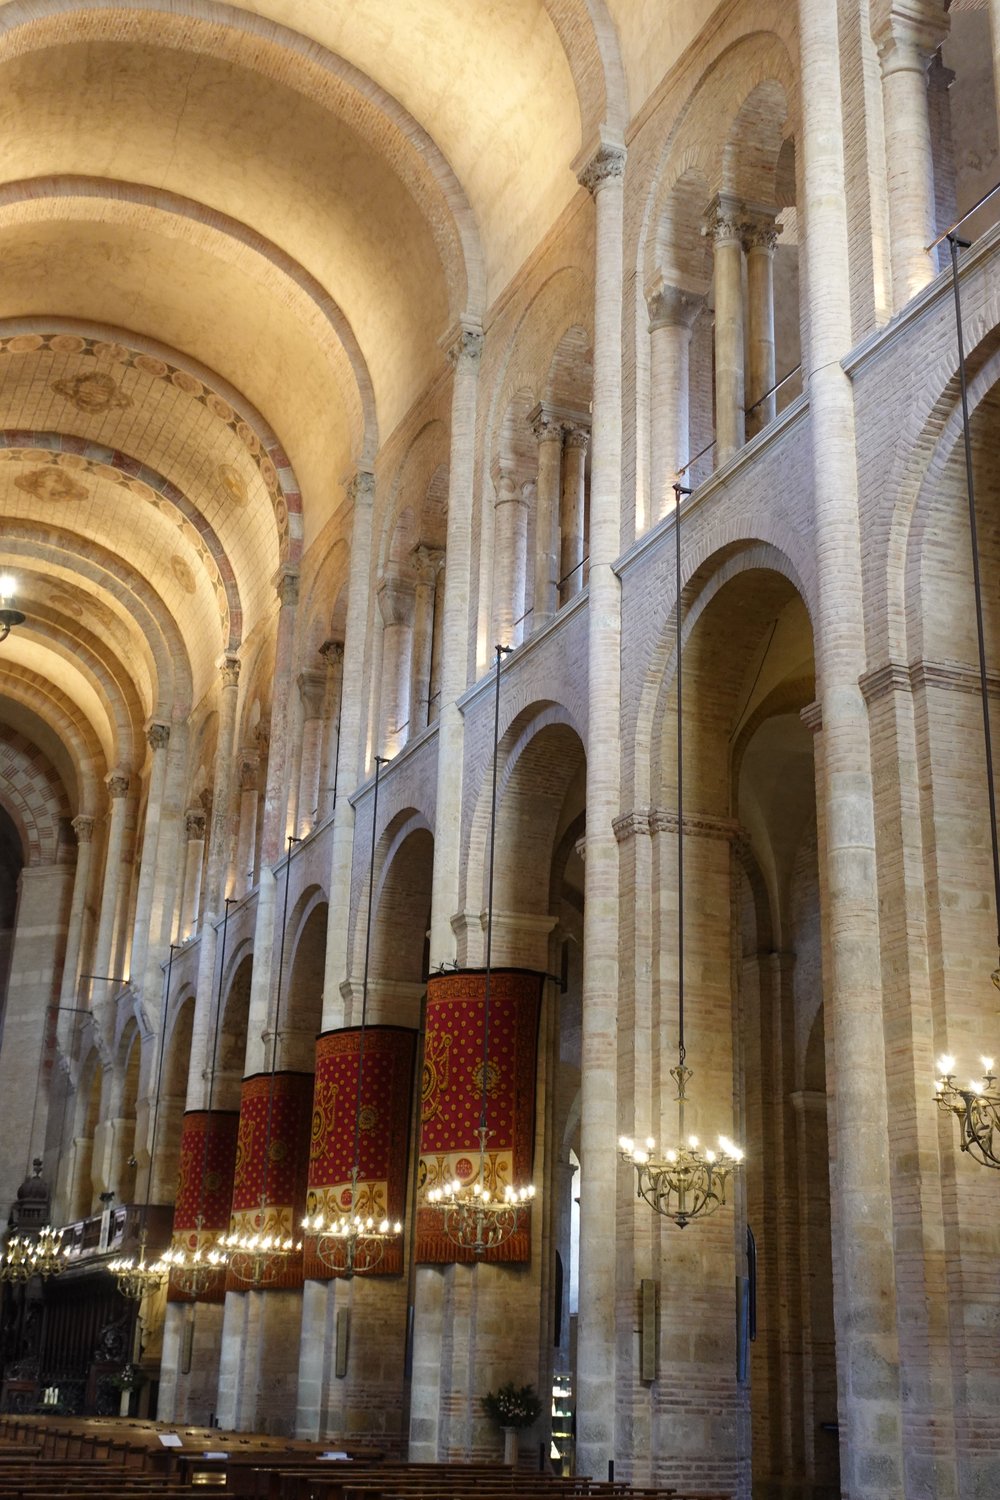 Stone Arches and Pillars, Basilica de Saint Sernin, Toulouse, France